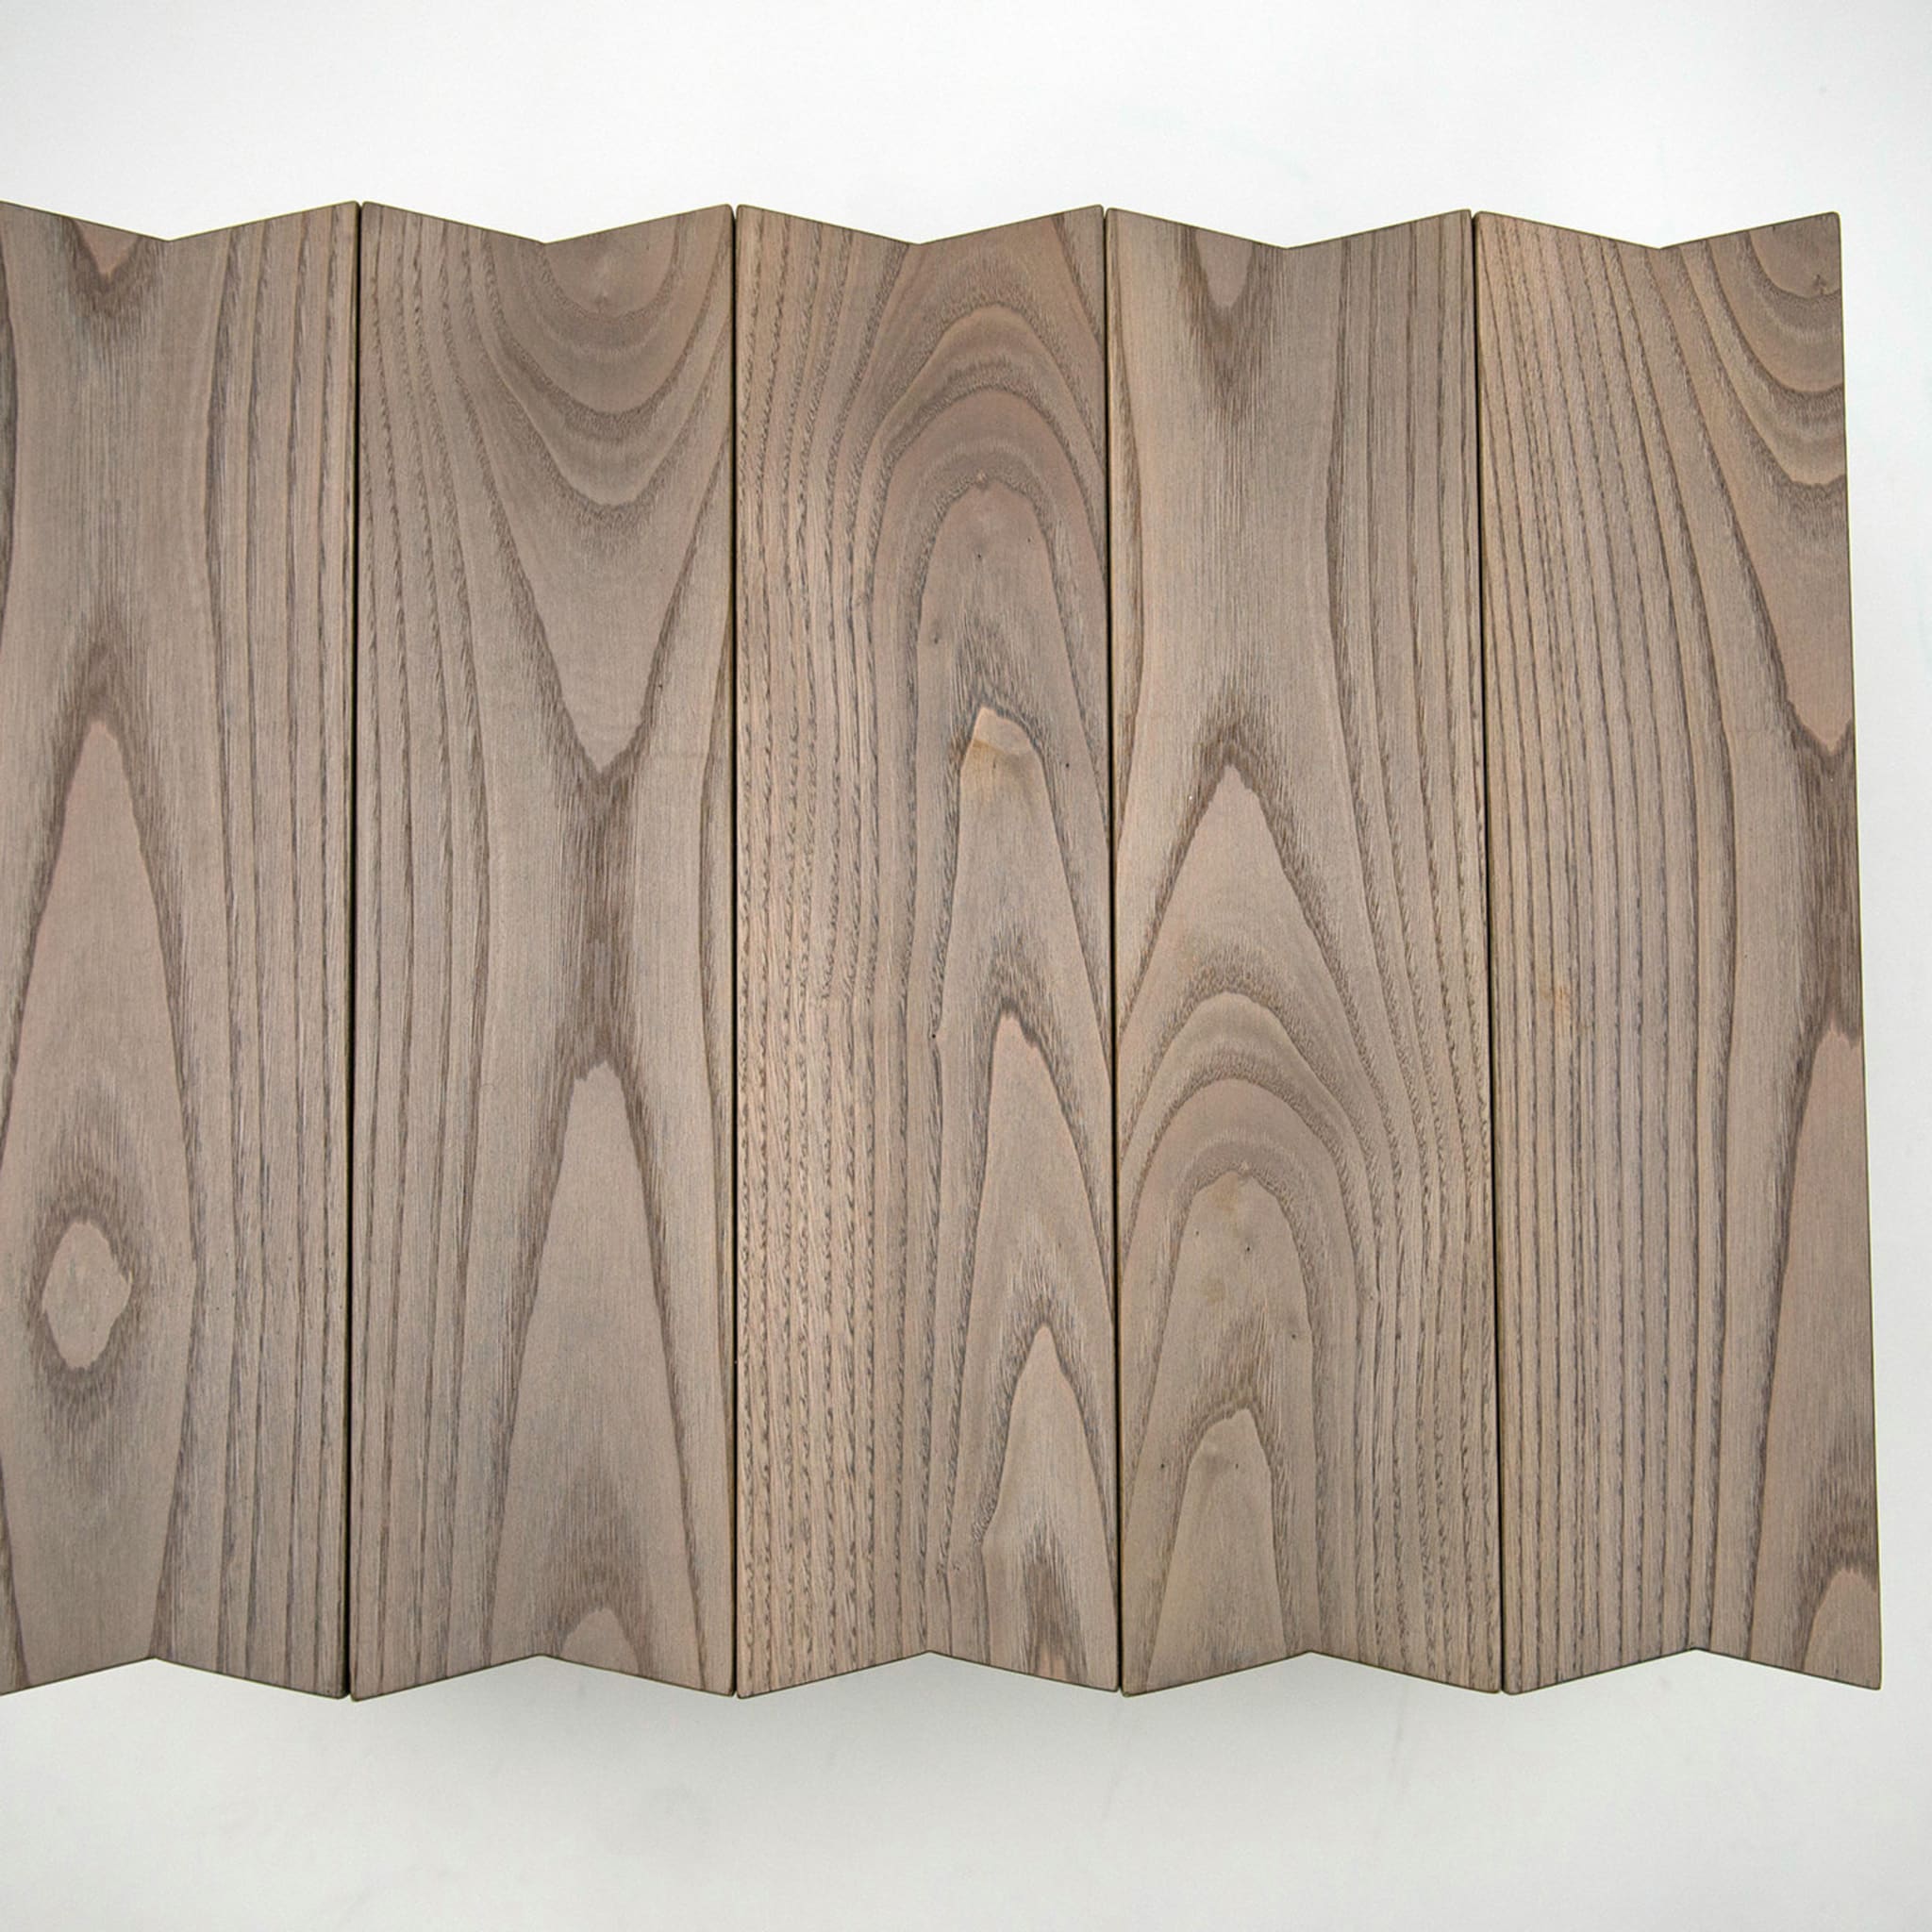 Wood Heart by Alberto Guarriello - Alternative view 3